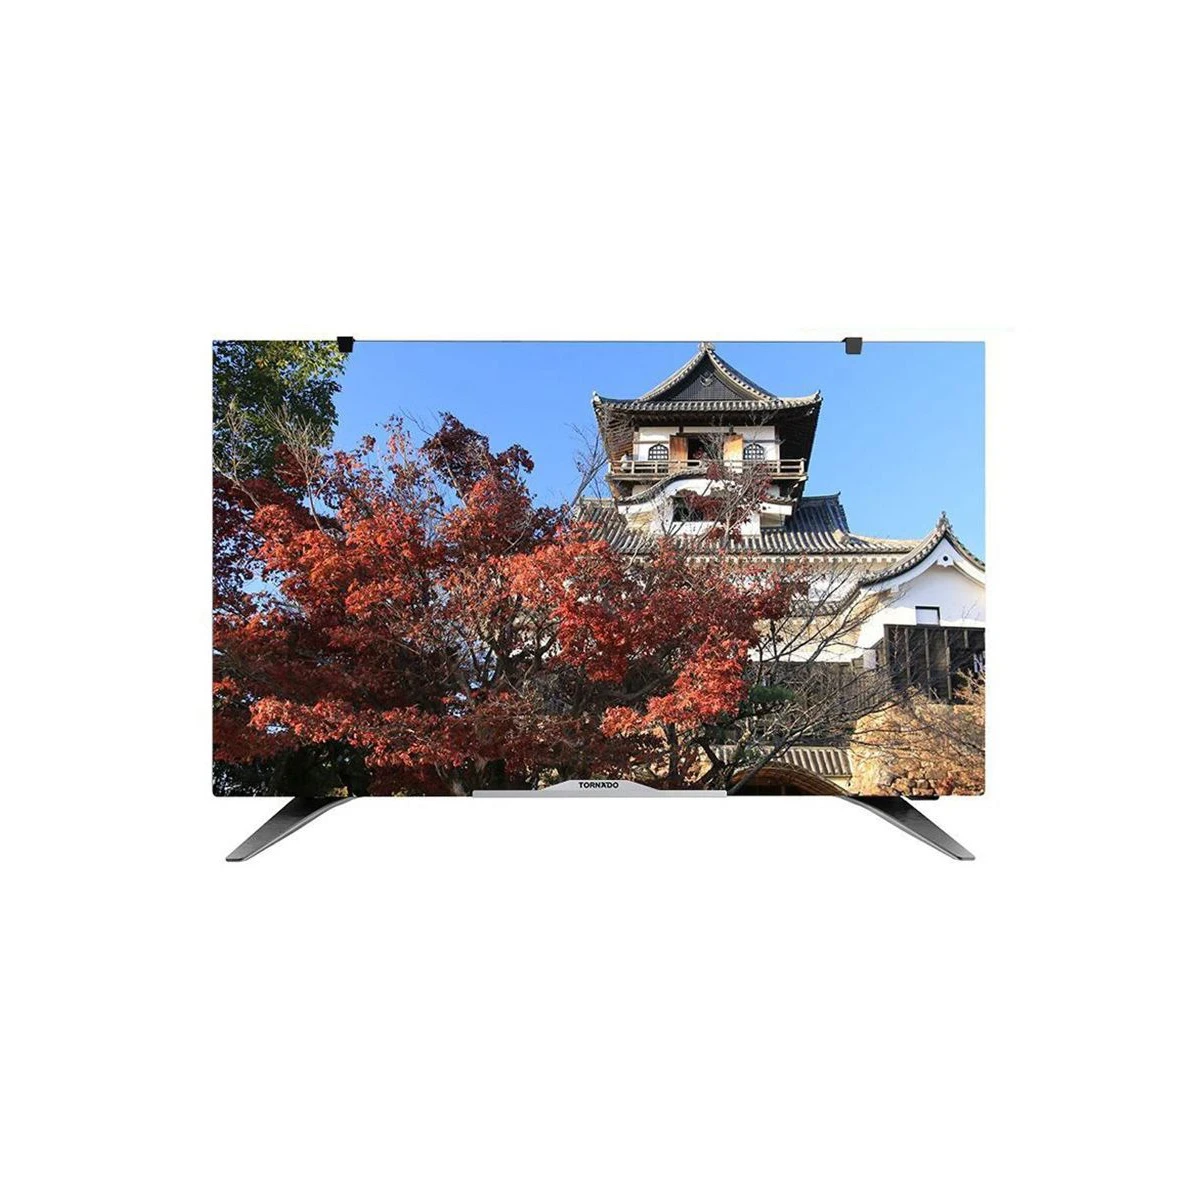 TORNADO HD Shield Smart TV 32 Inch, Built-In Receiver 32ES9300E-A